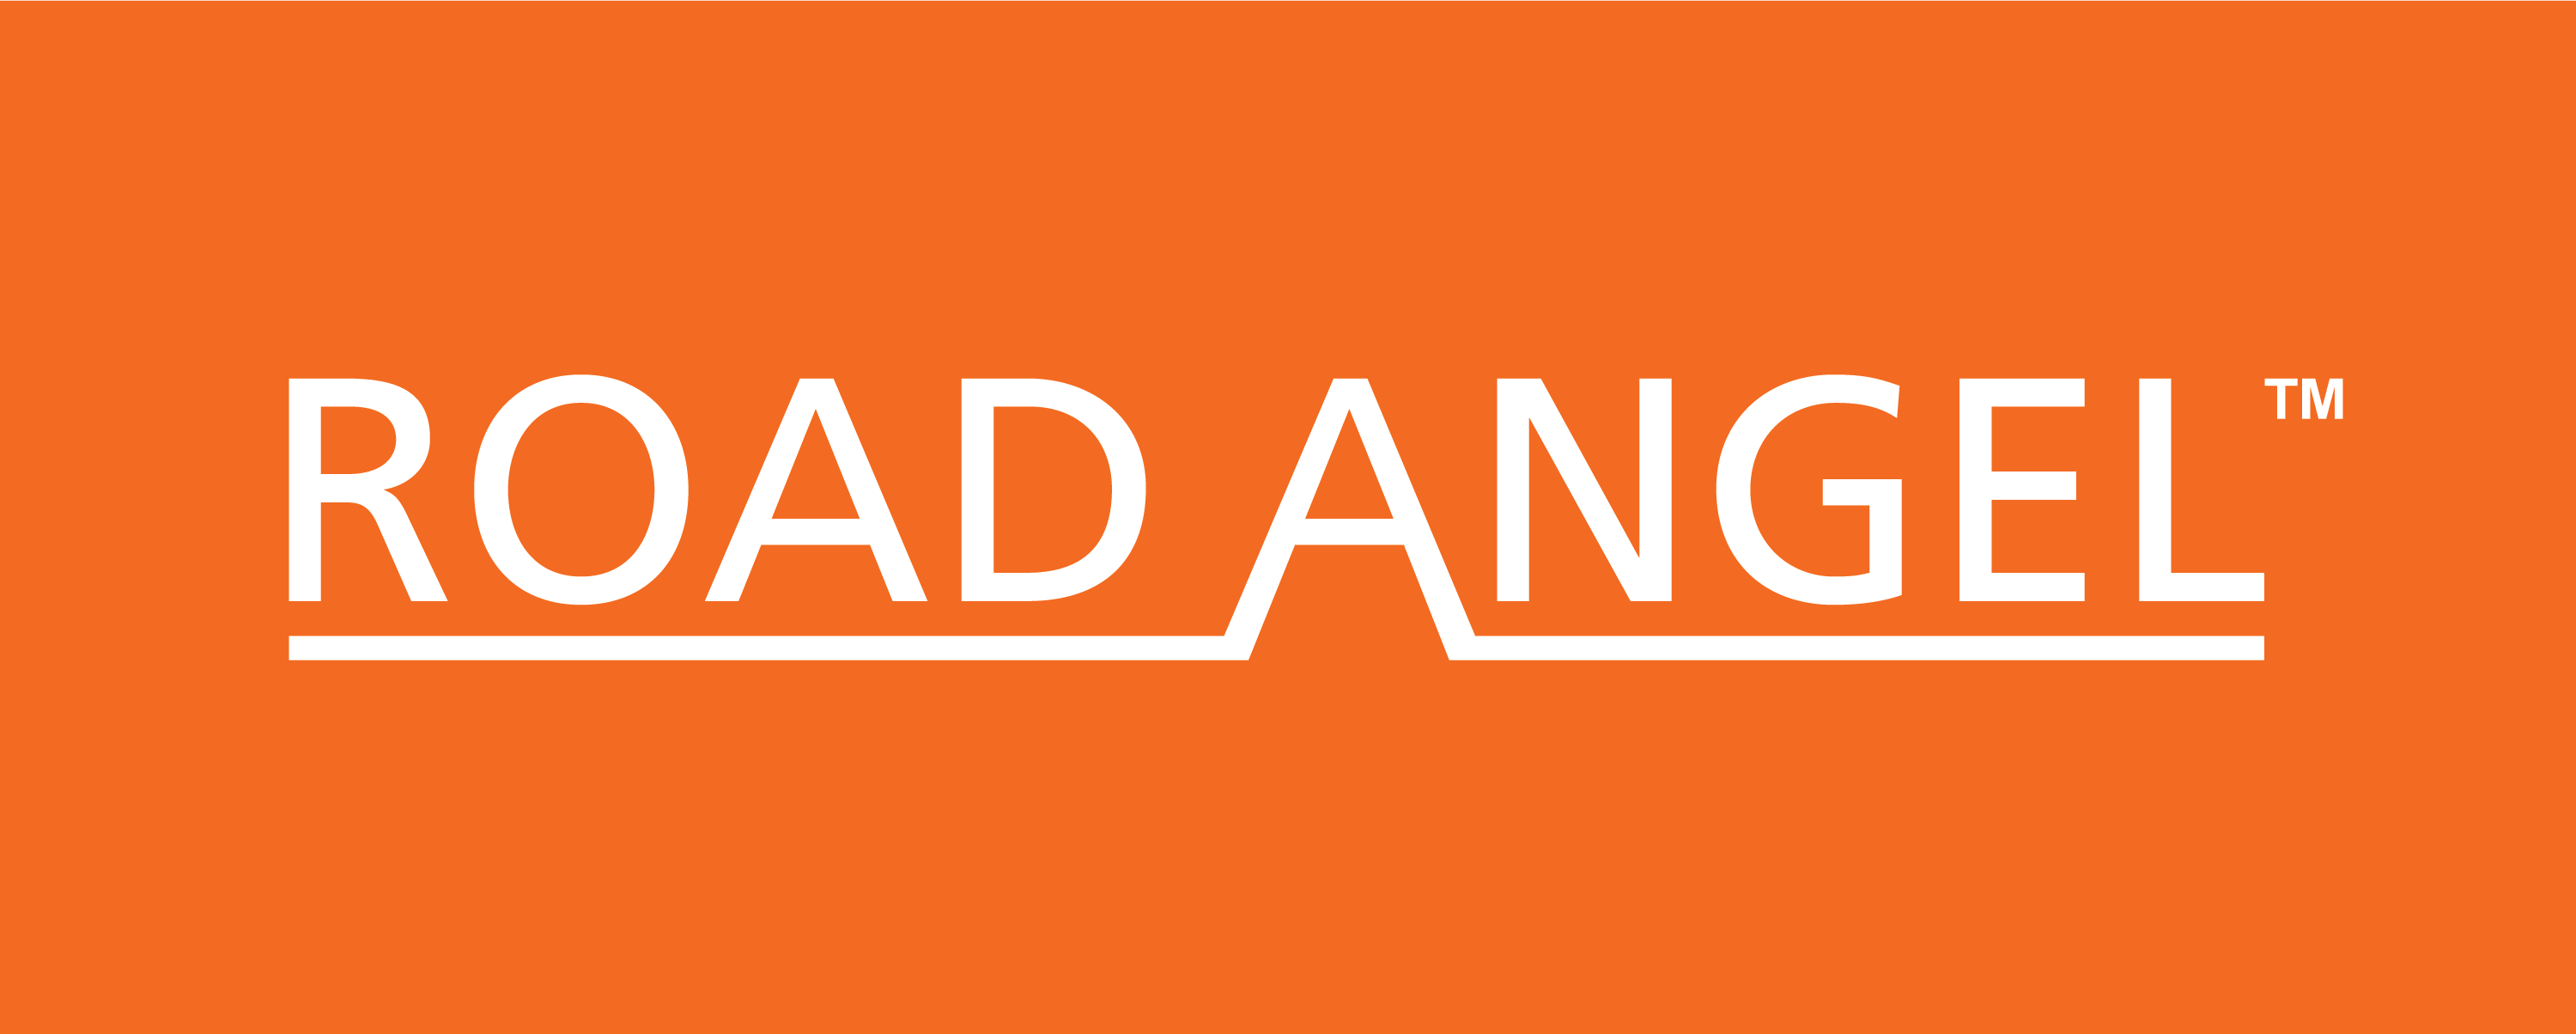 Road Angel RAAA1 Android Auto Wireless Adapter